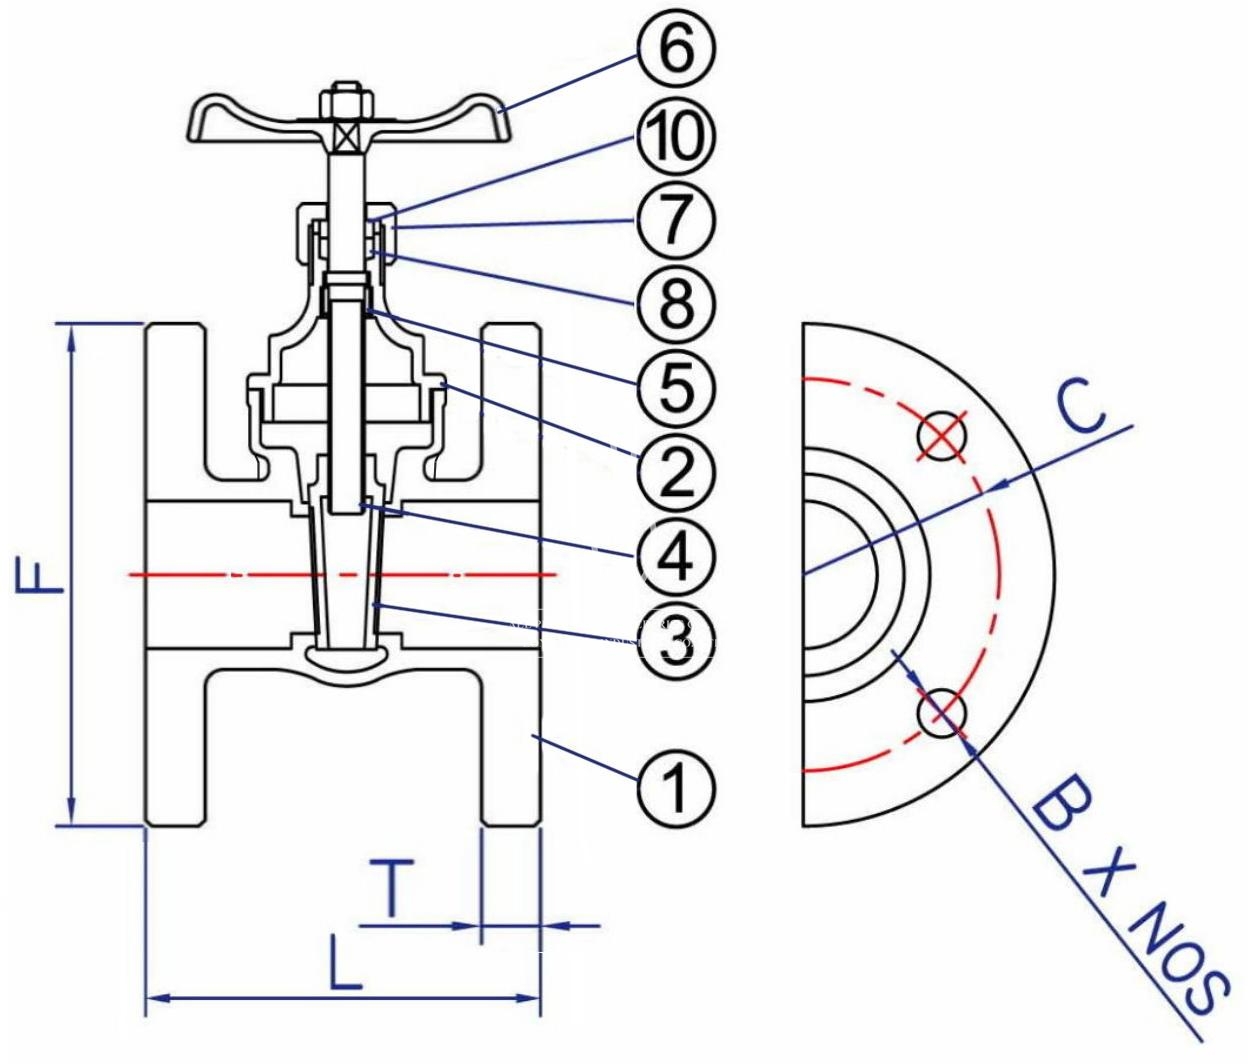 ST-803 Gate valve drawing